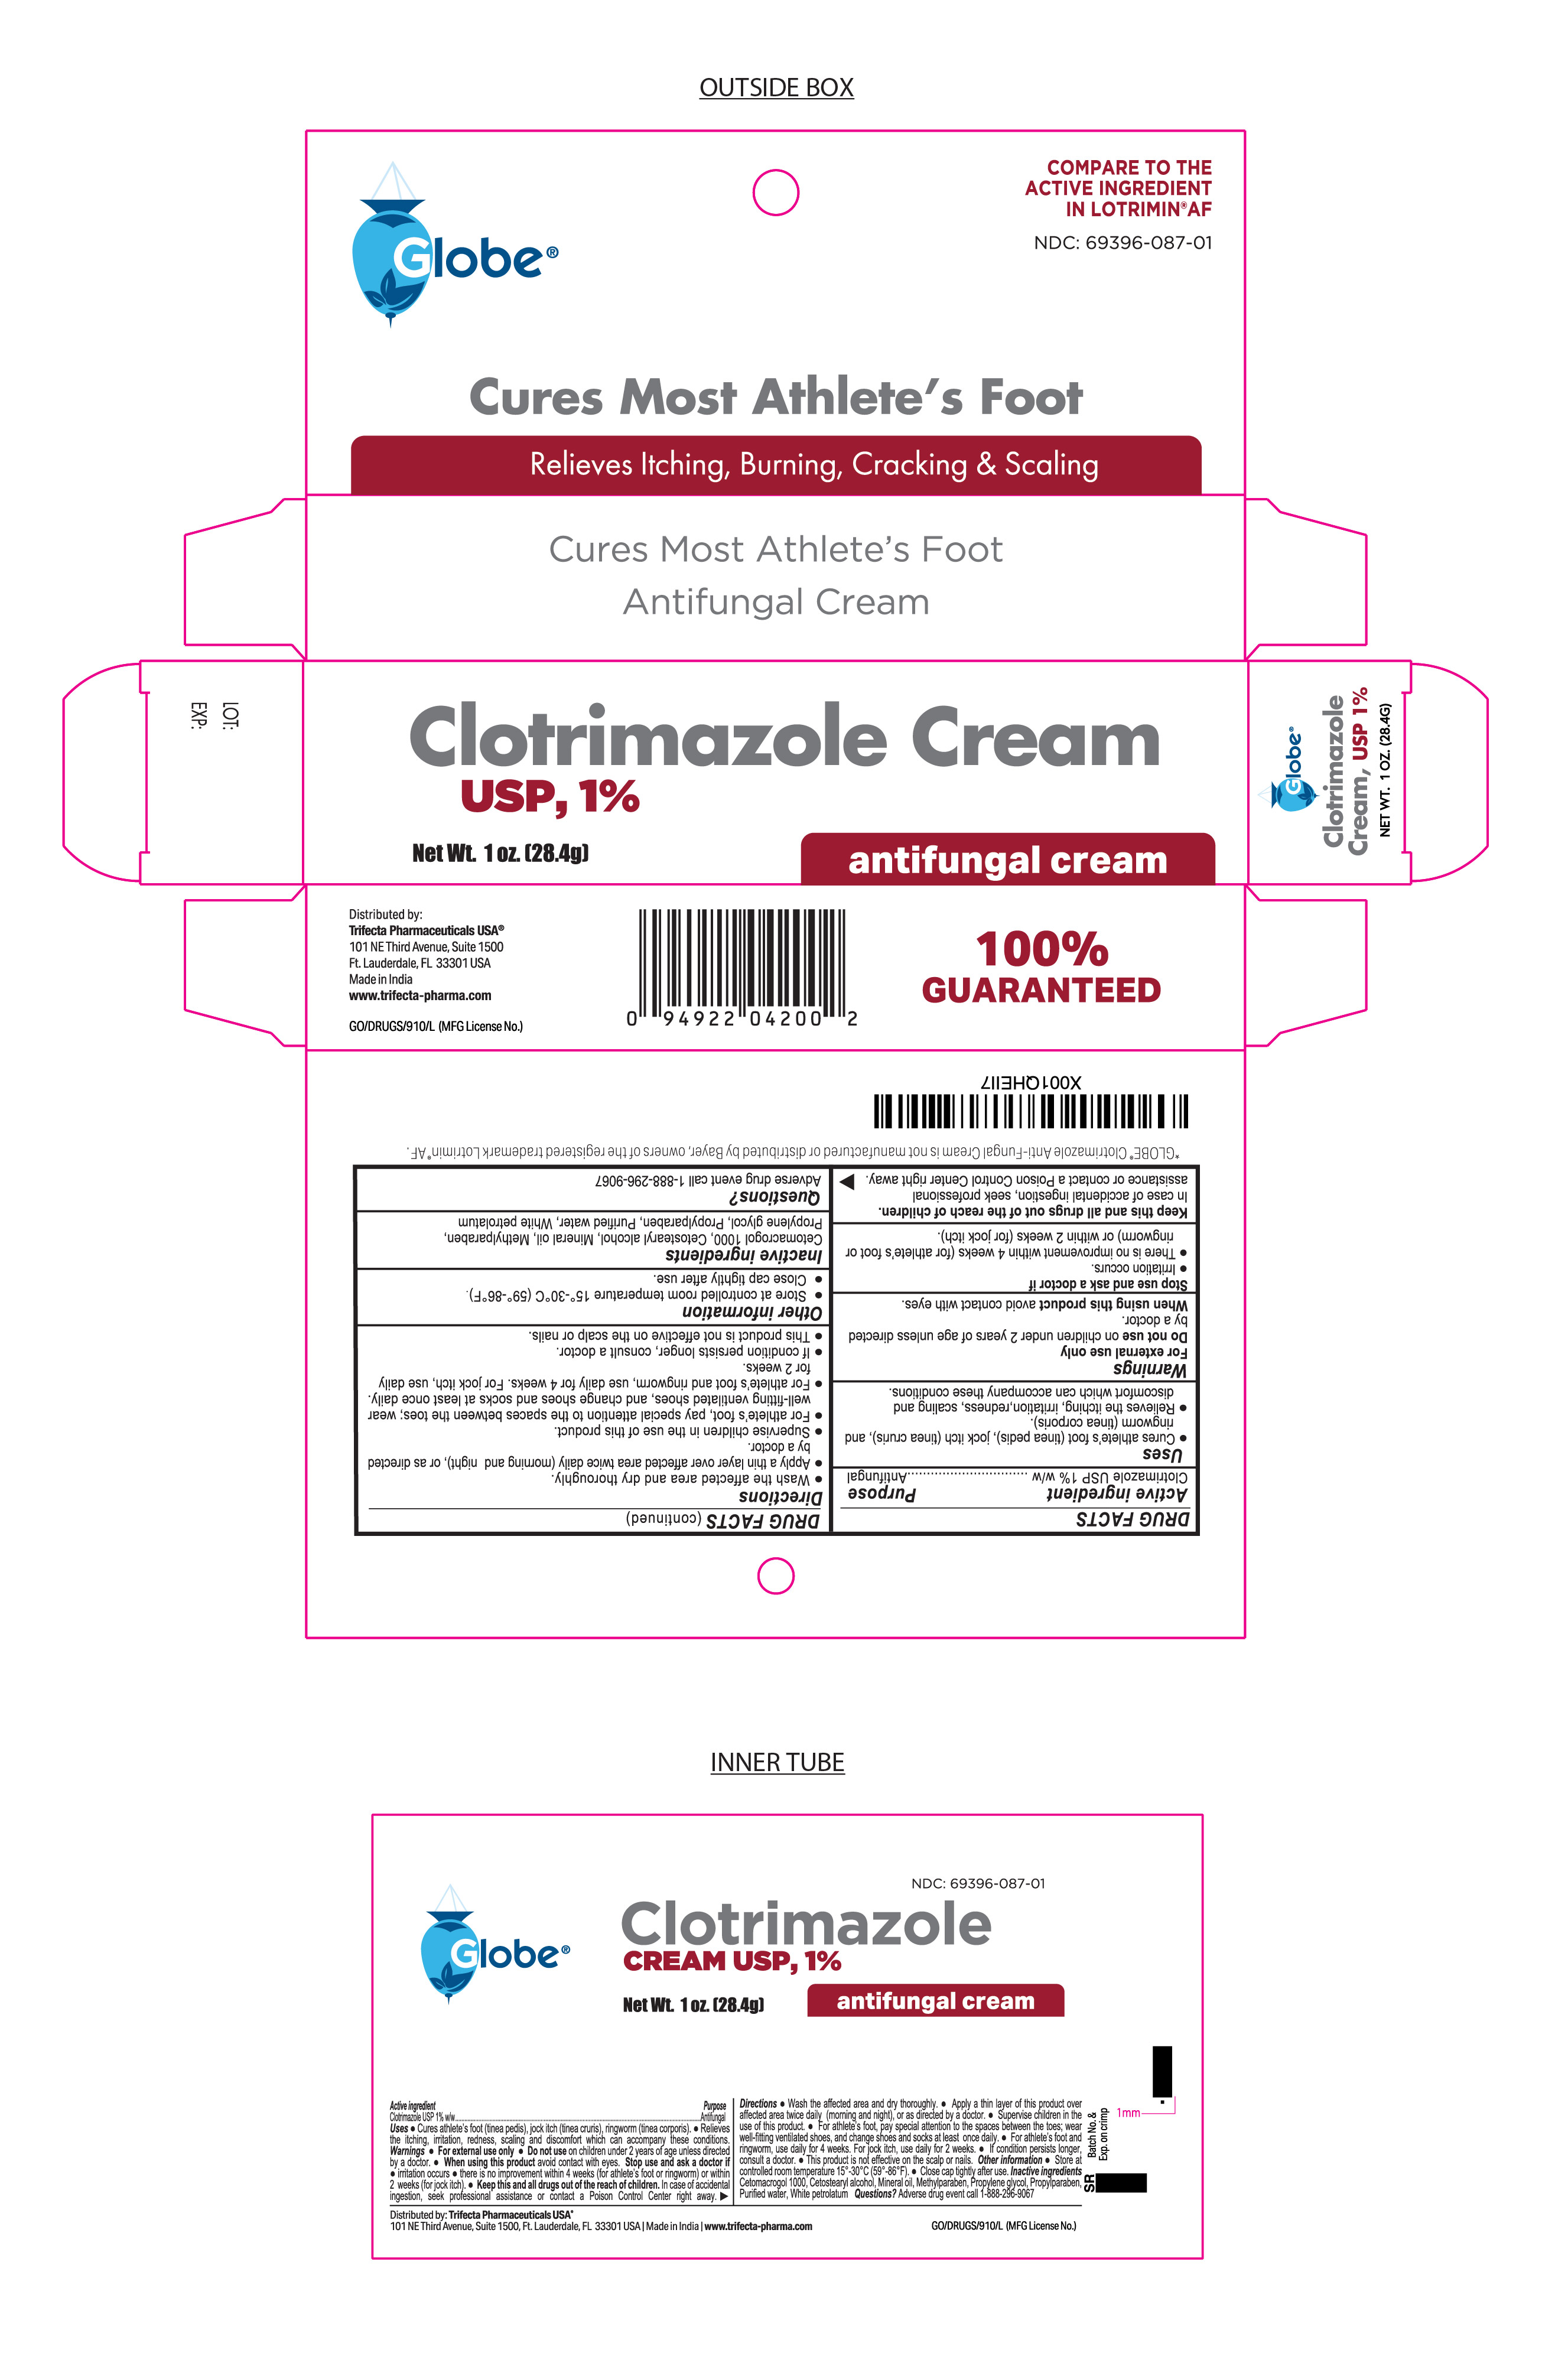 clotrimazole-1oz-22-CDR